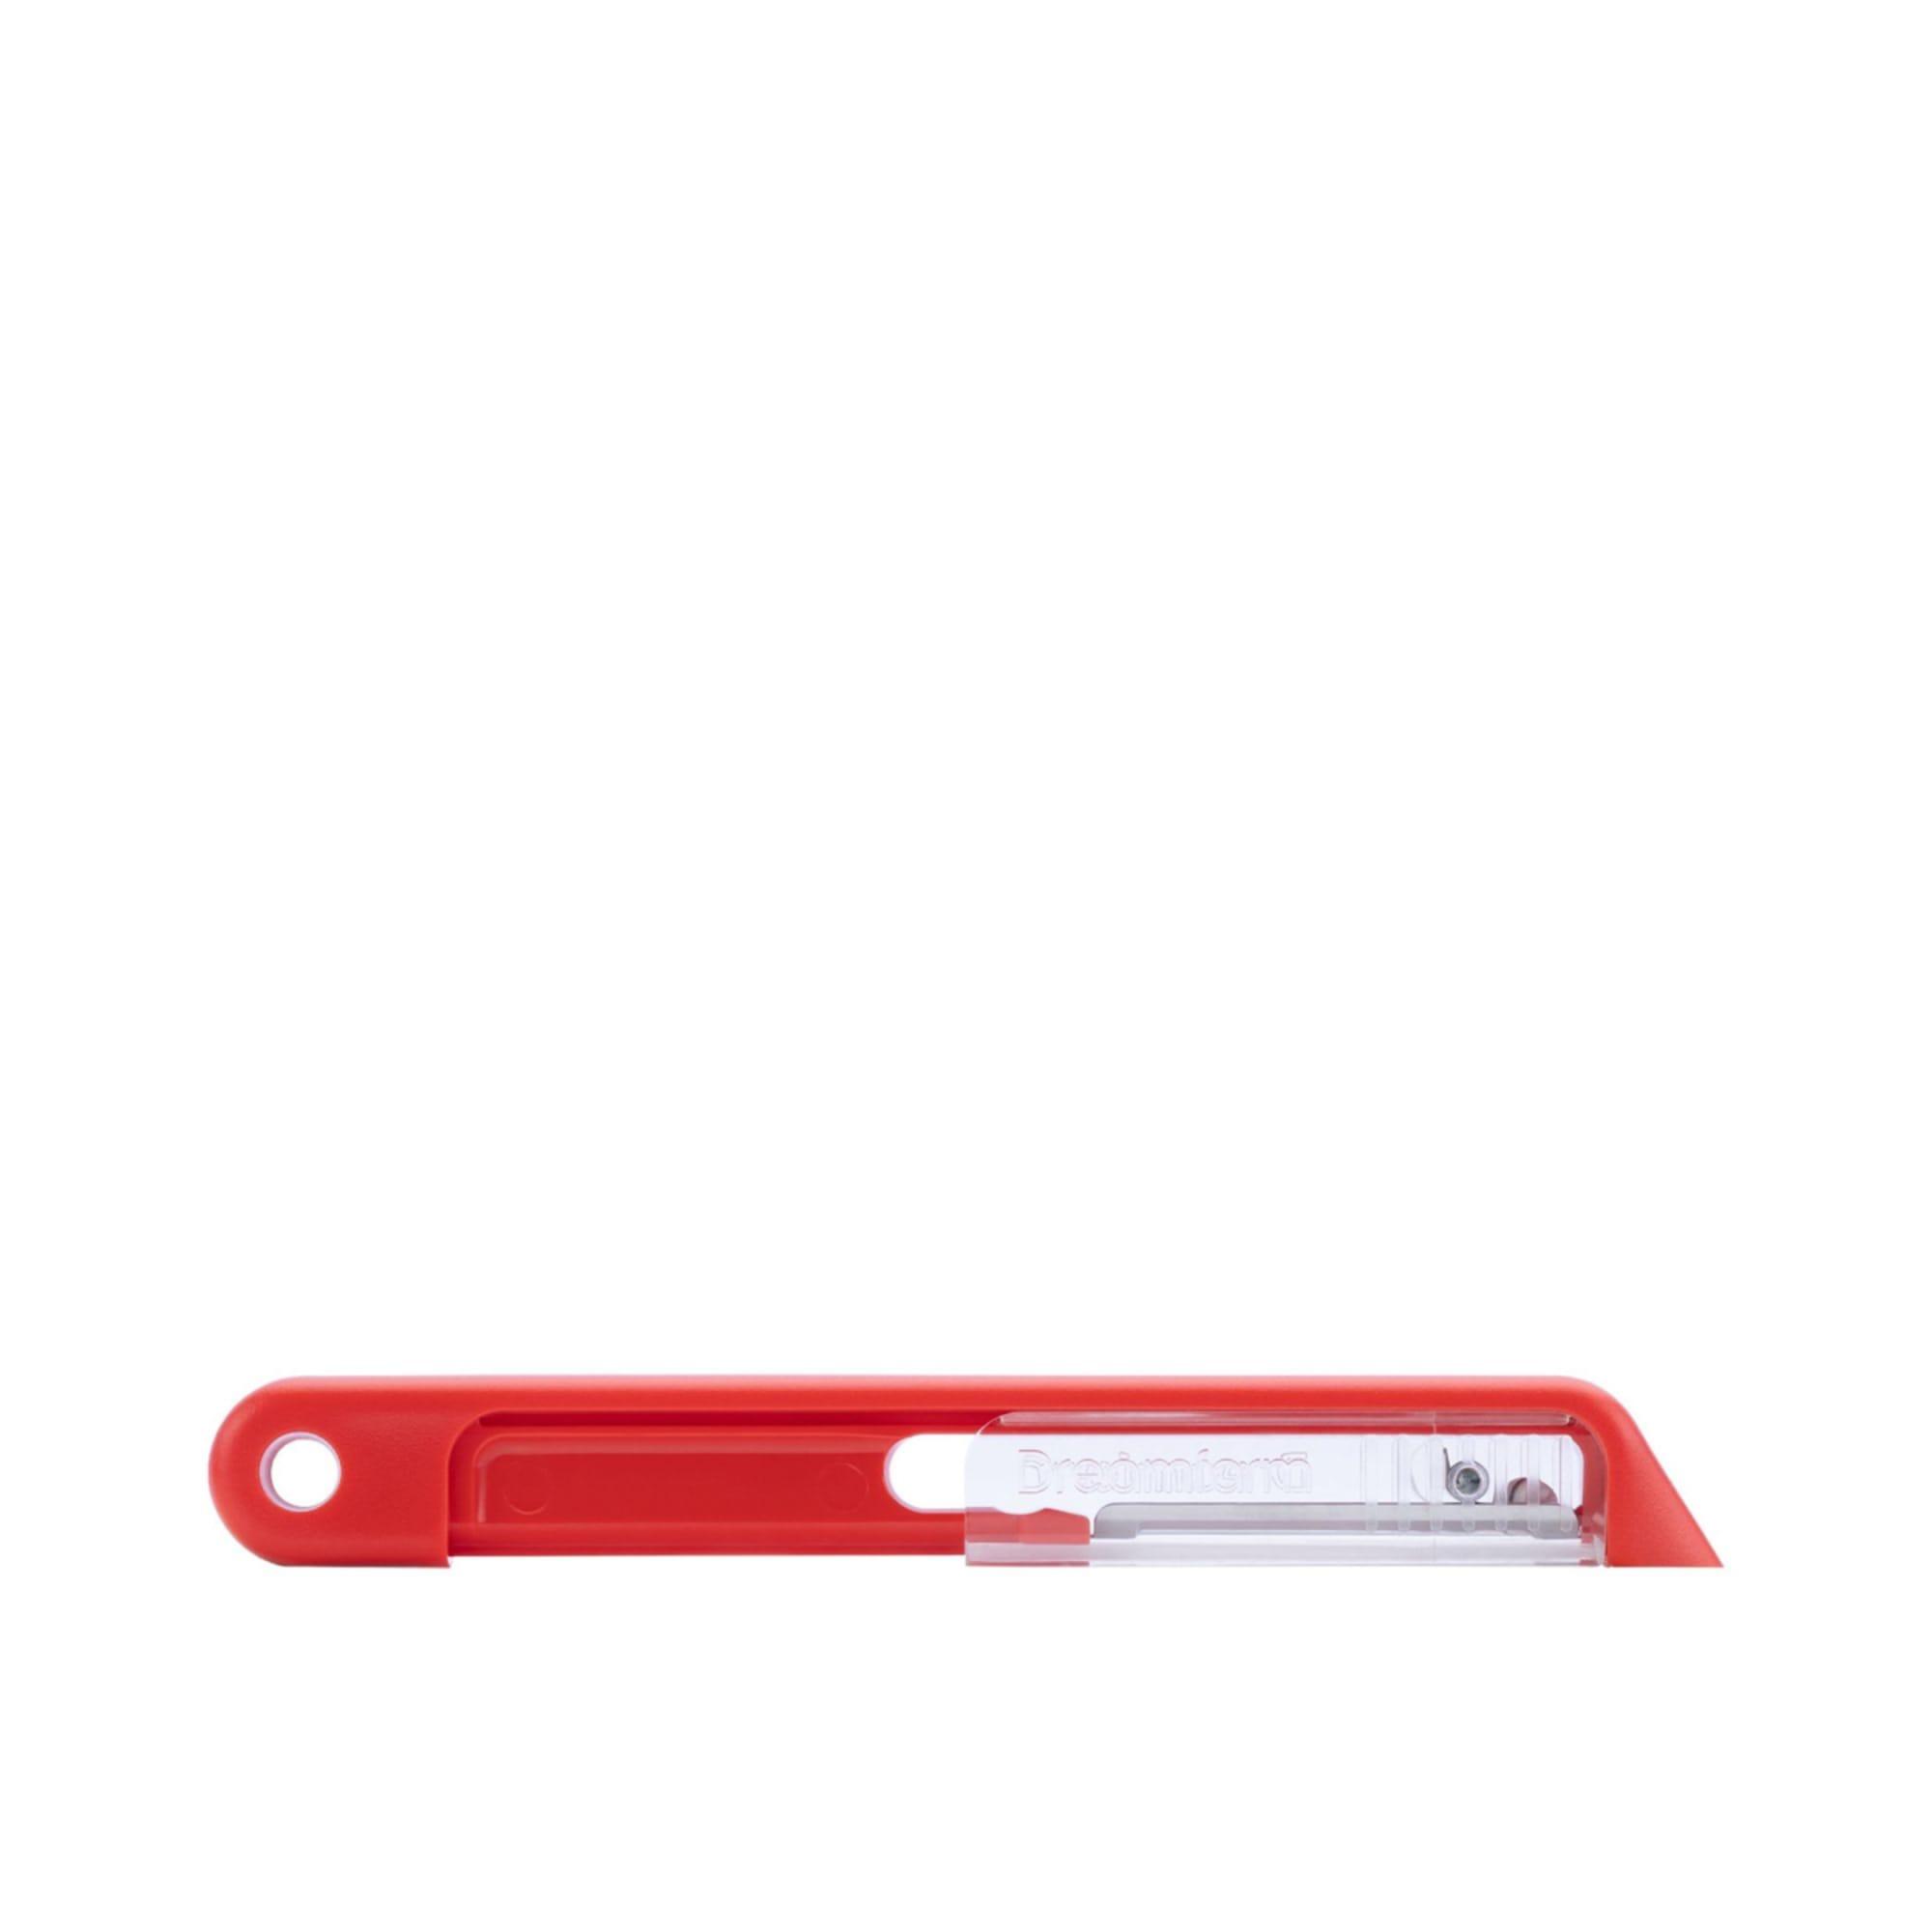 Dreamfarm Sharple Sharp Safety Peeler Red Image 6